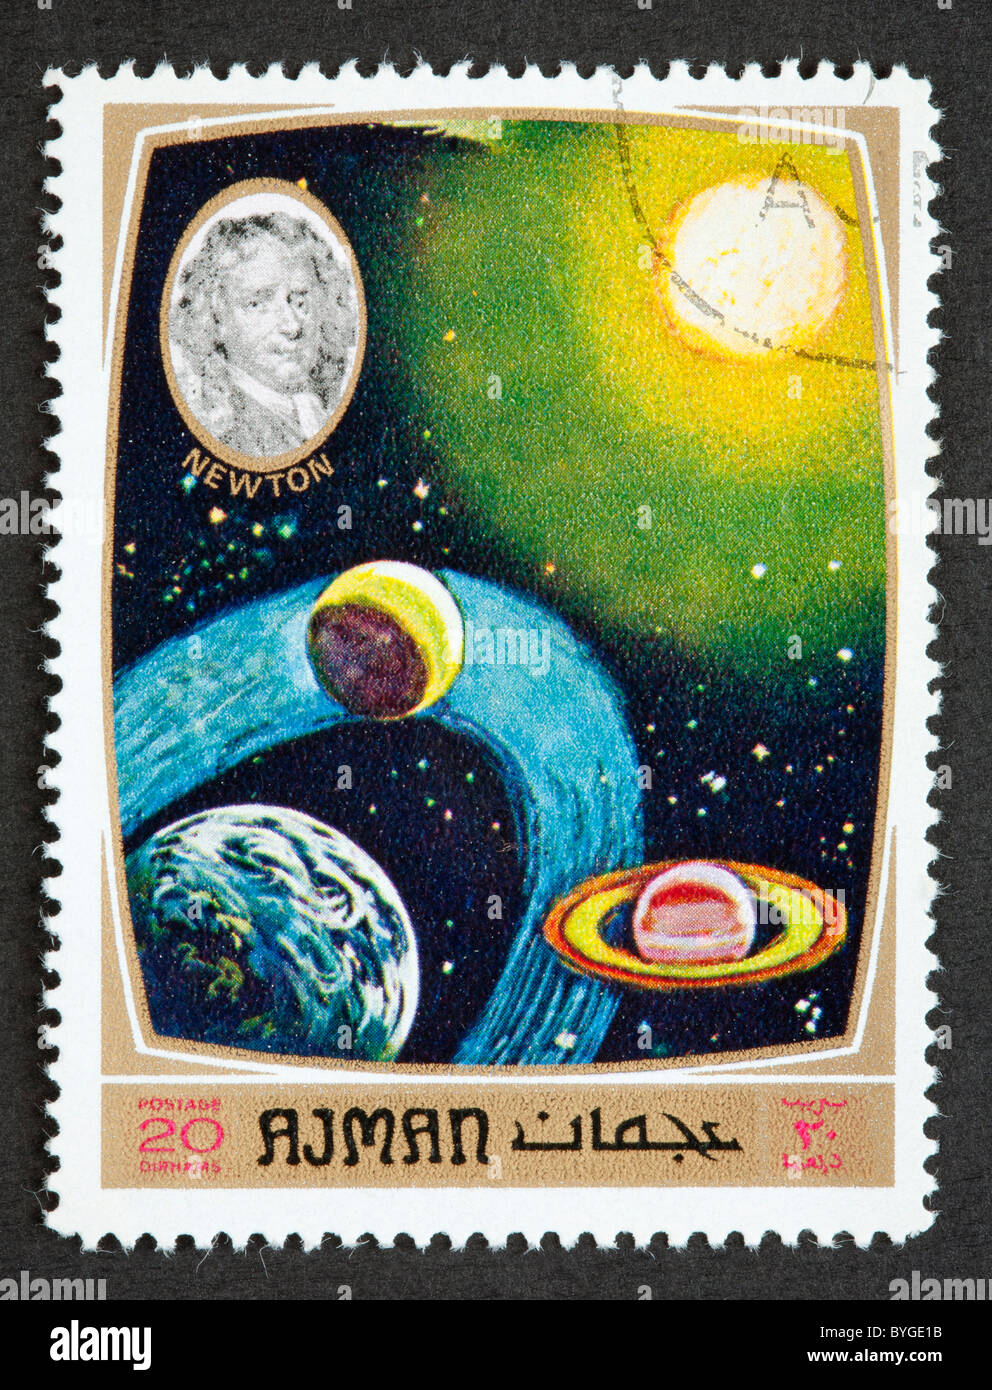 Ajman Postage Stamp Foto de stock